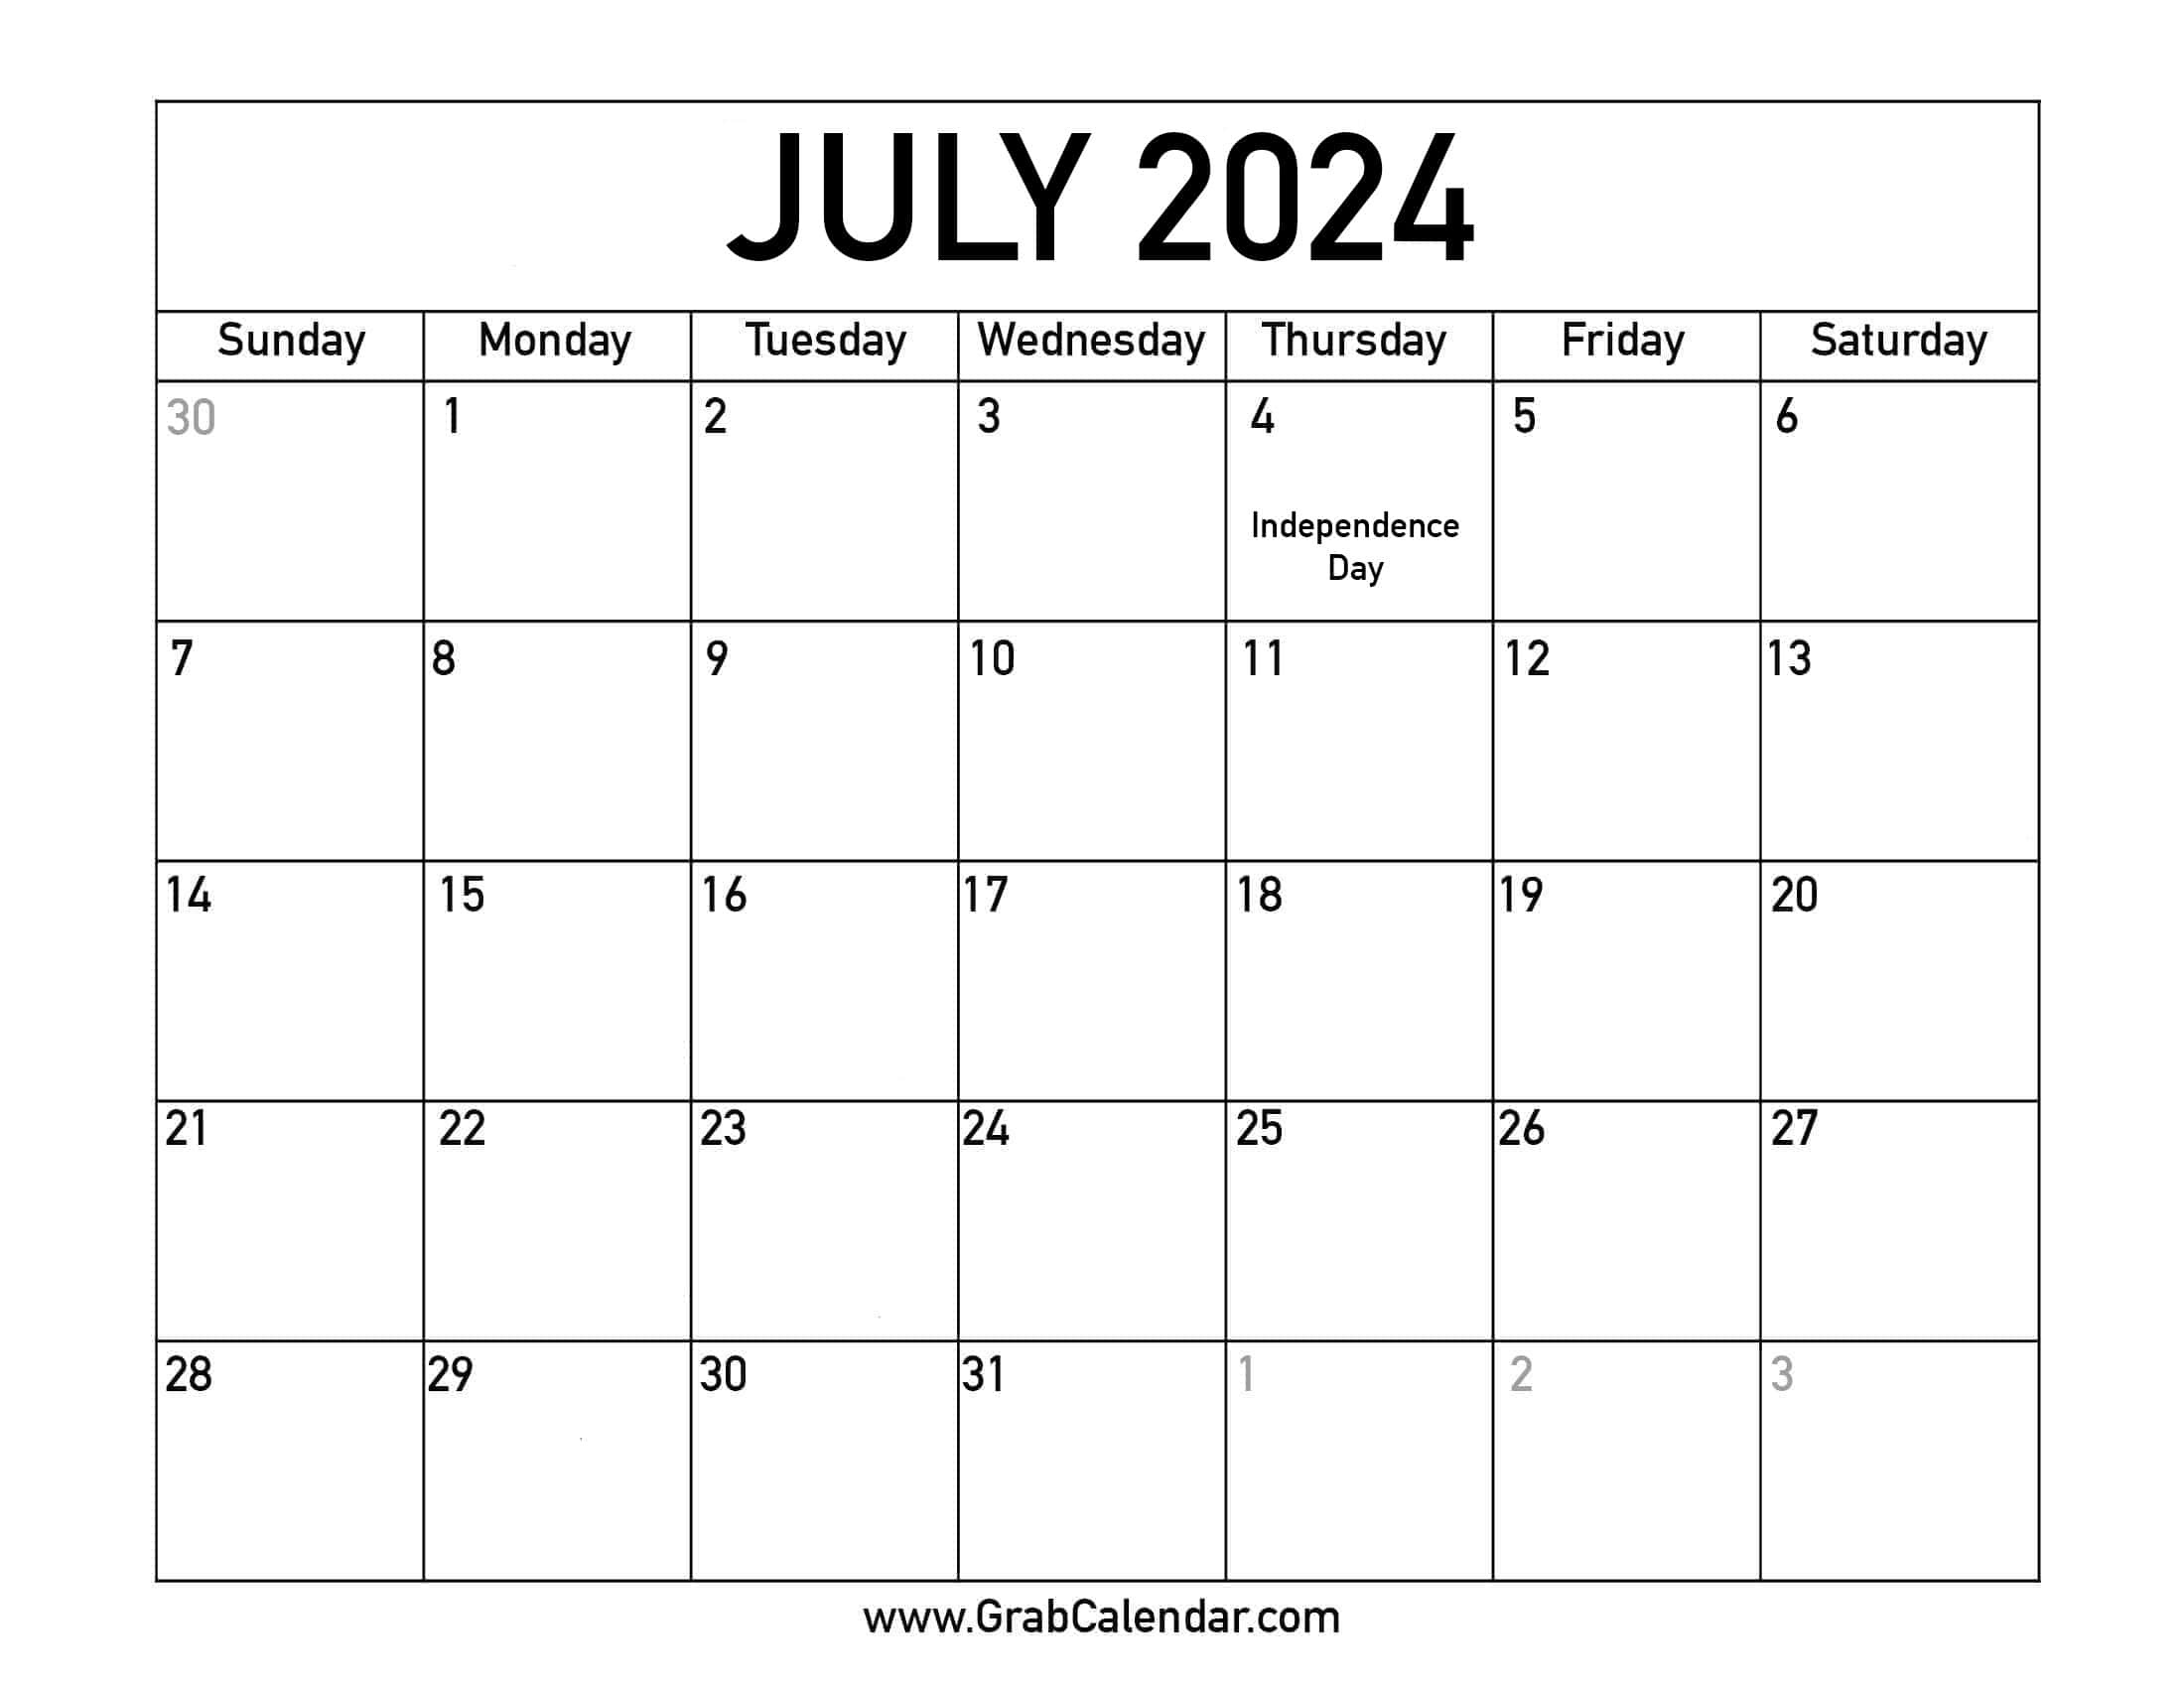 Printable July 2024 Calendar regarding Show a Calendar For July 2024